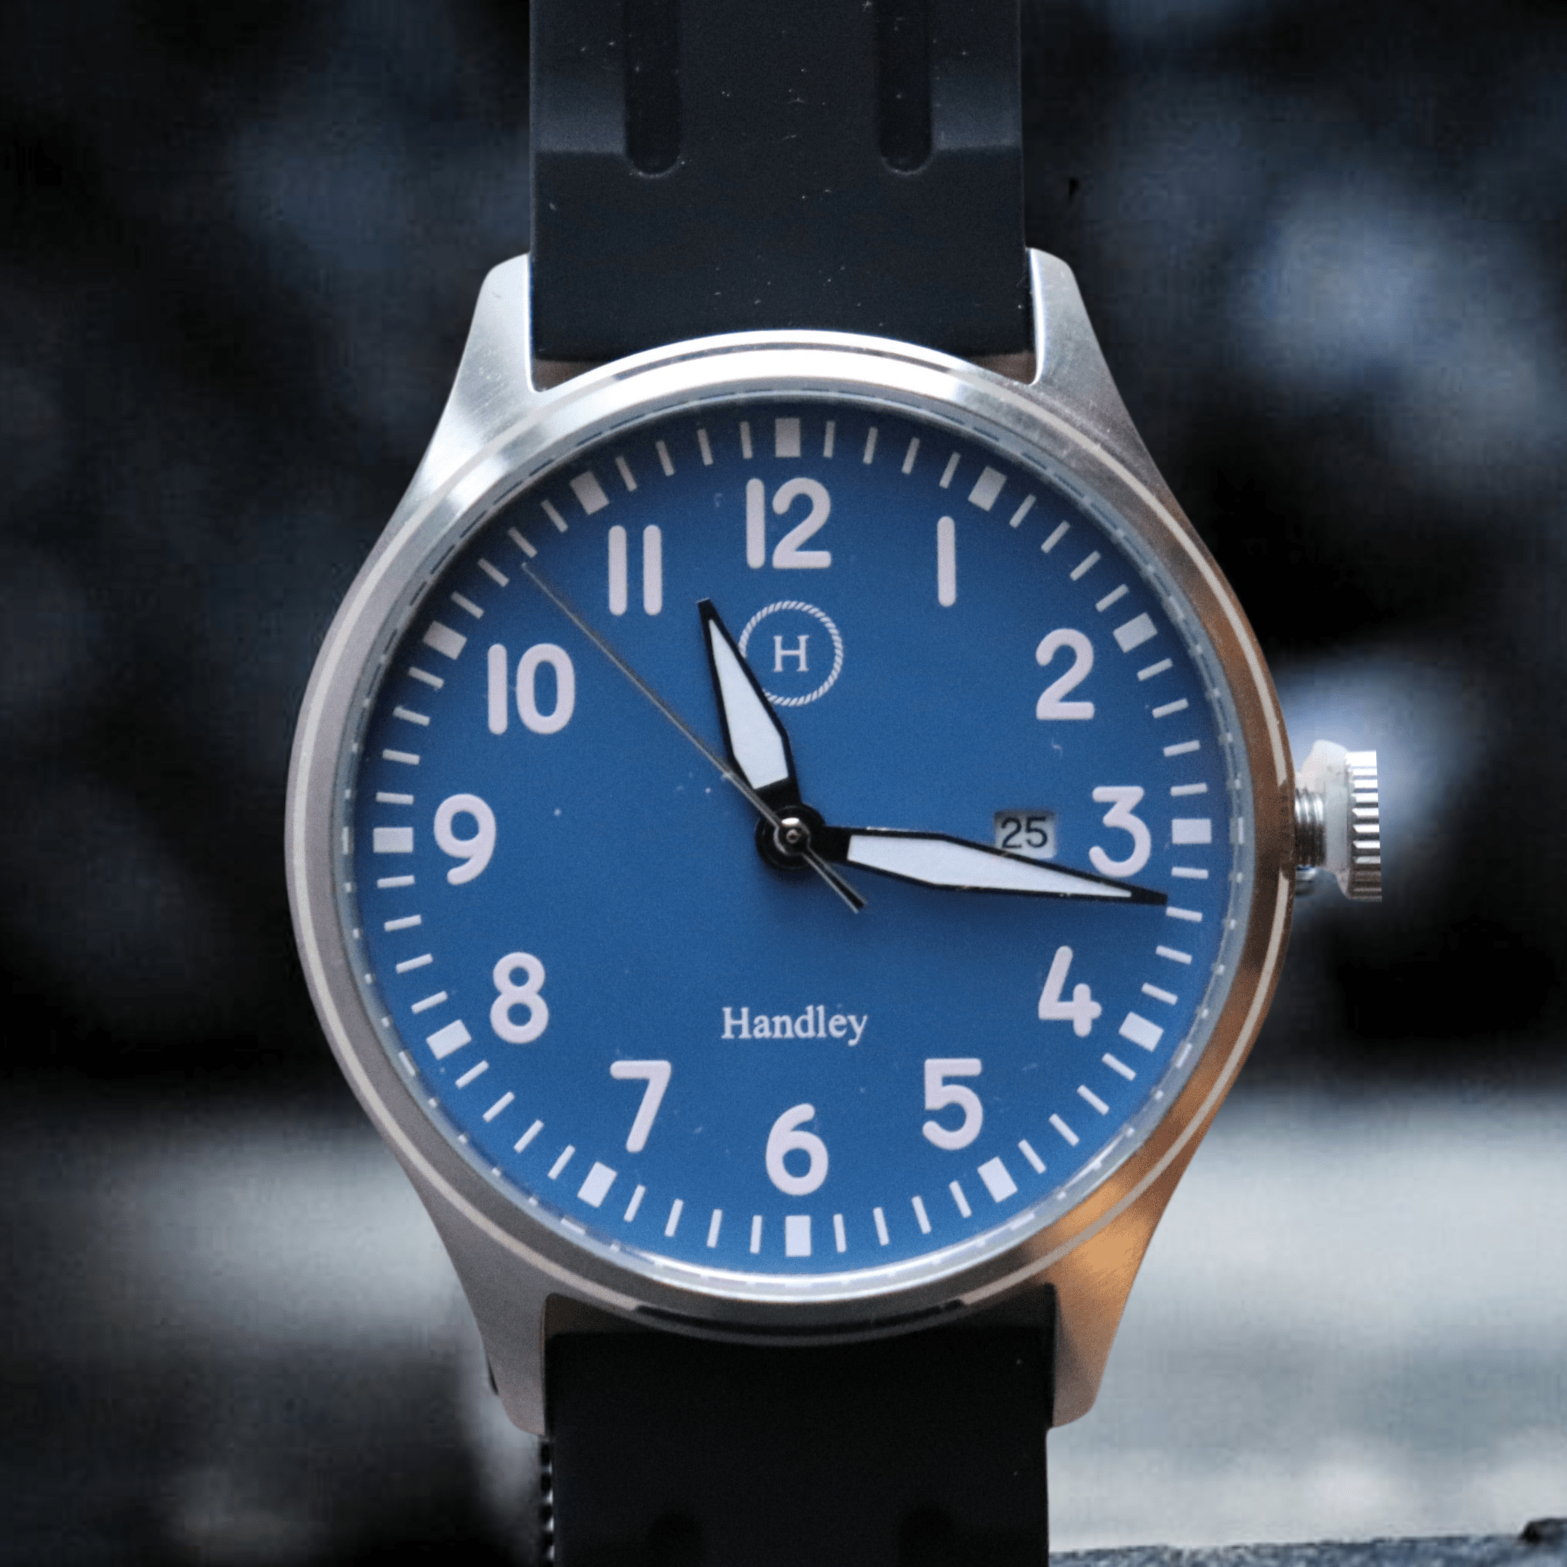 The Bondi - Handley Watches